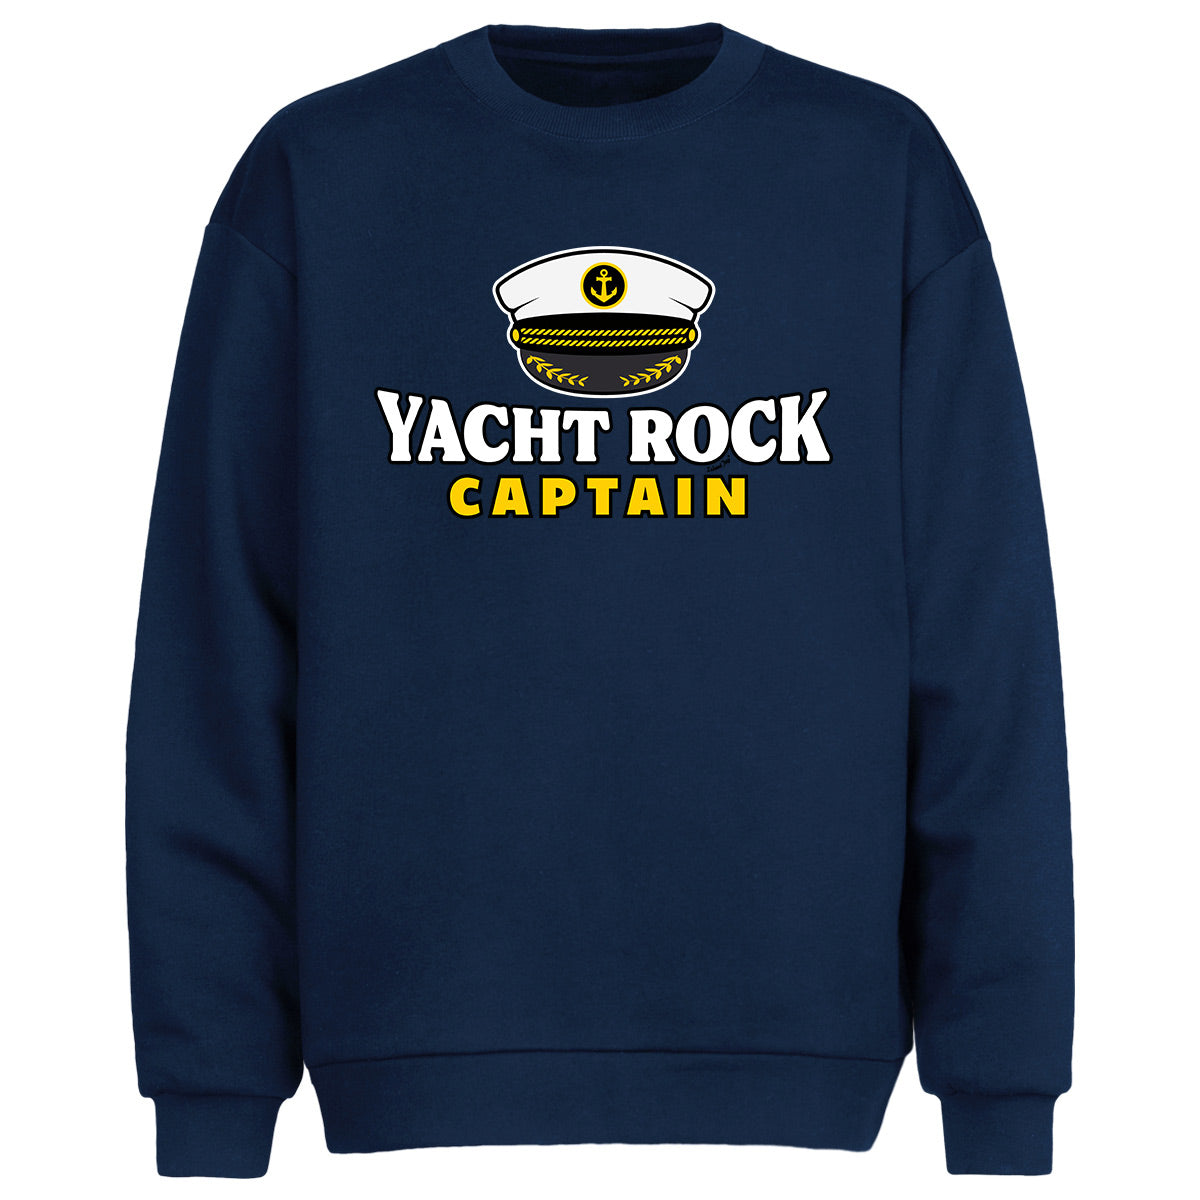 Yach Rock Captain warn sweatshirt  navy